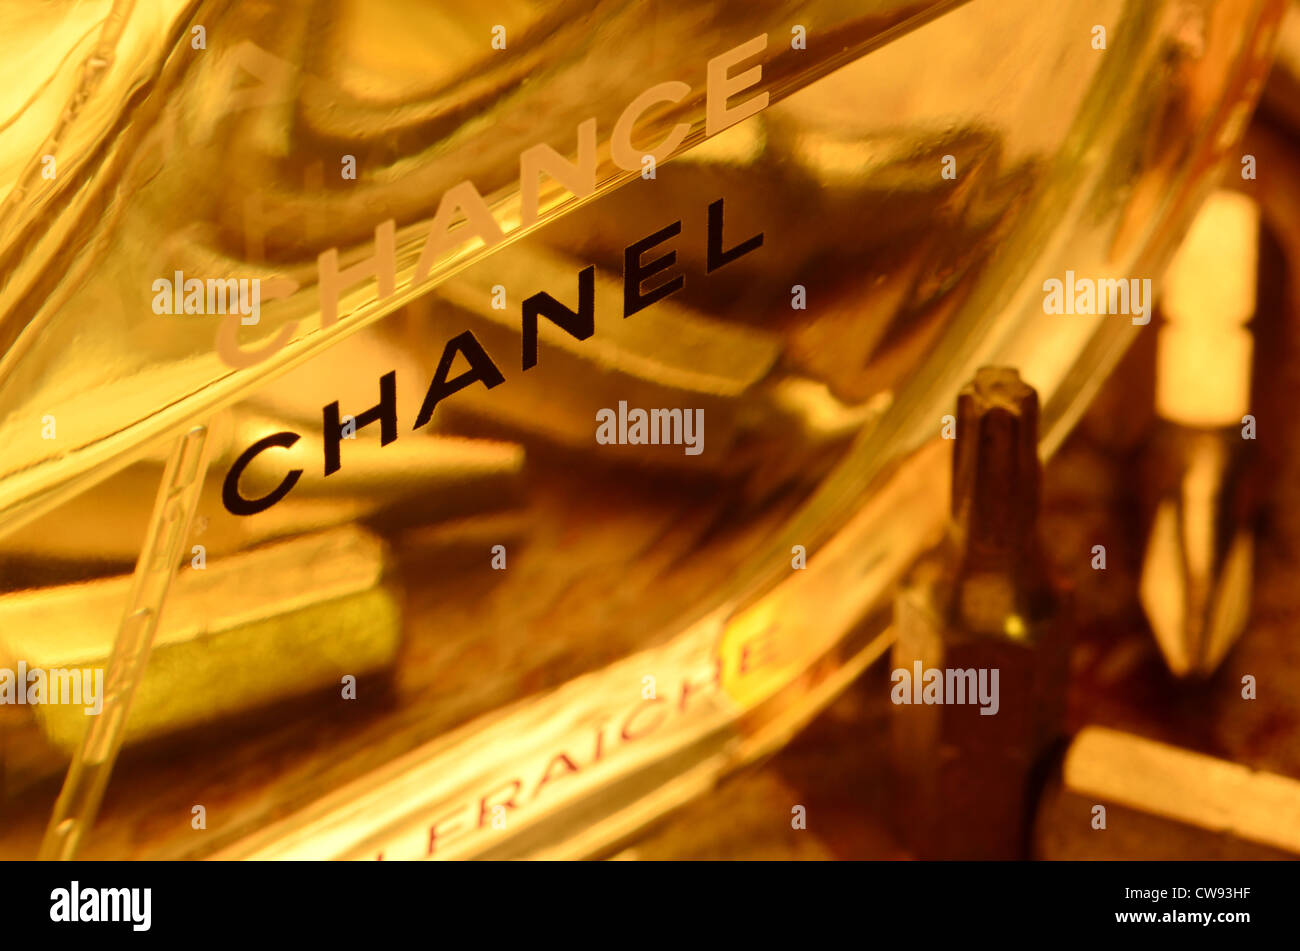 Chanel, platino, Egoiste, caja, negocios, venta, viernes negro